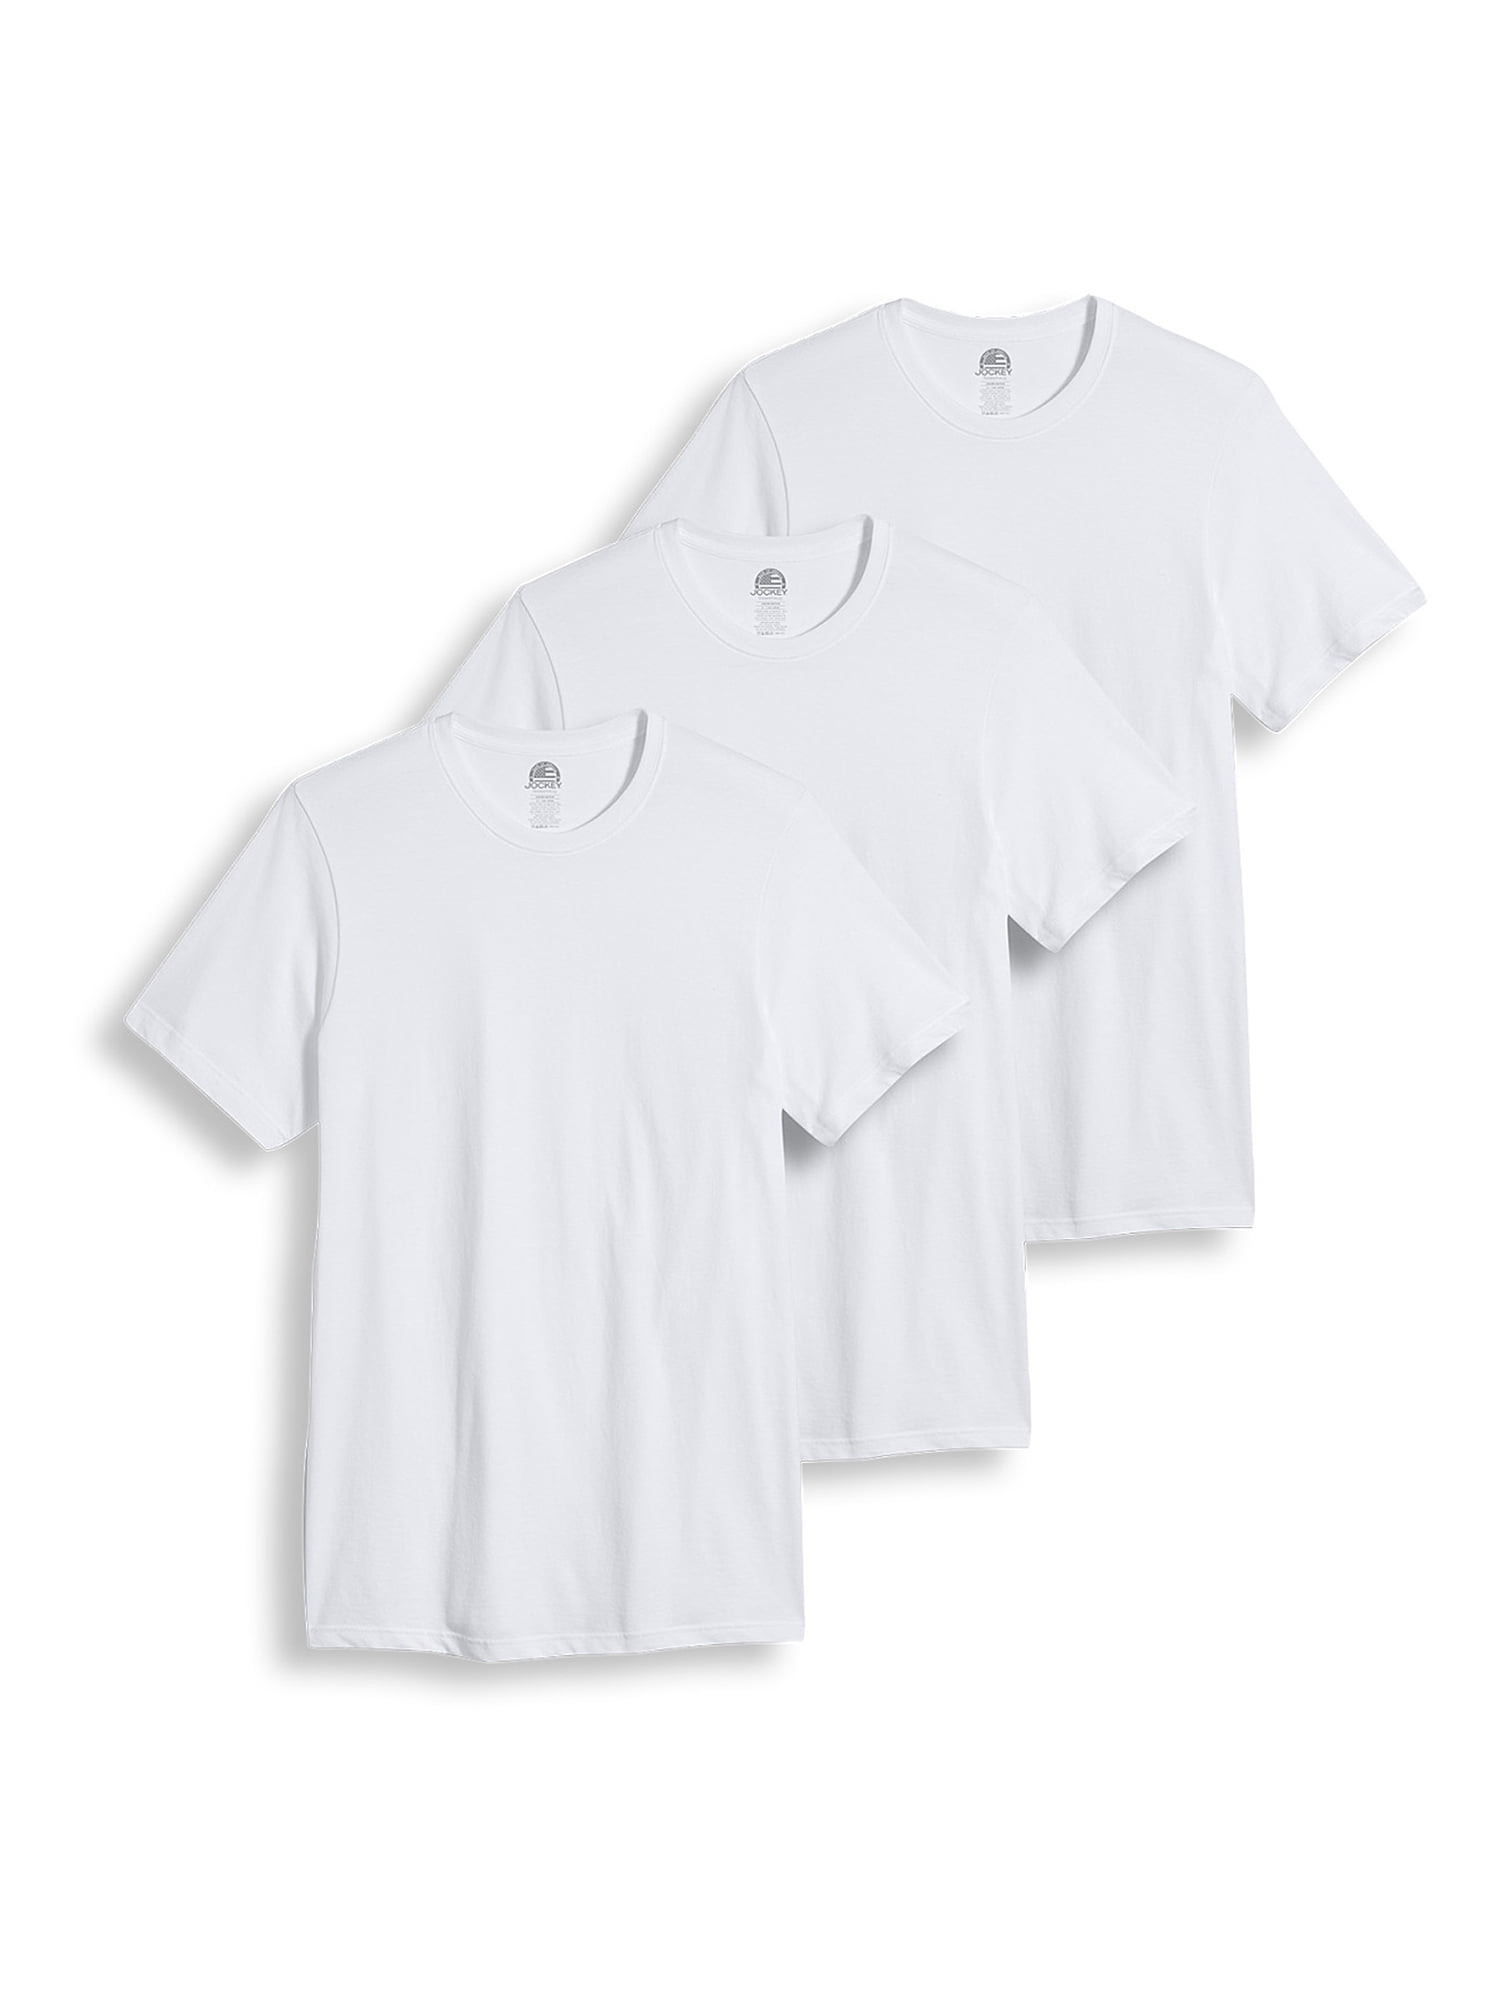 Jockey Mens Classic Crew Neck White T-Shirts STAYNEW Cotton XL Extra Large 6 Pk